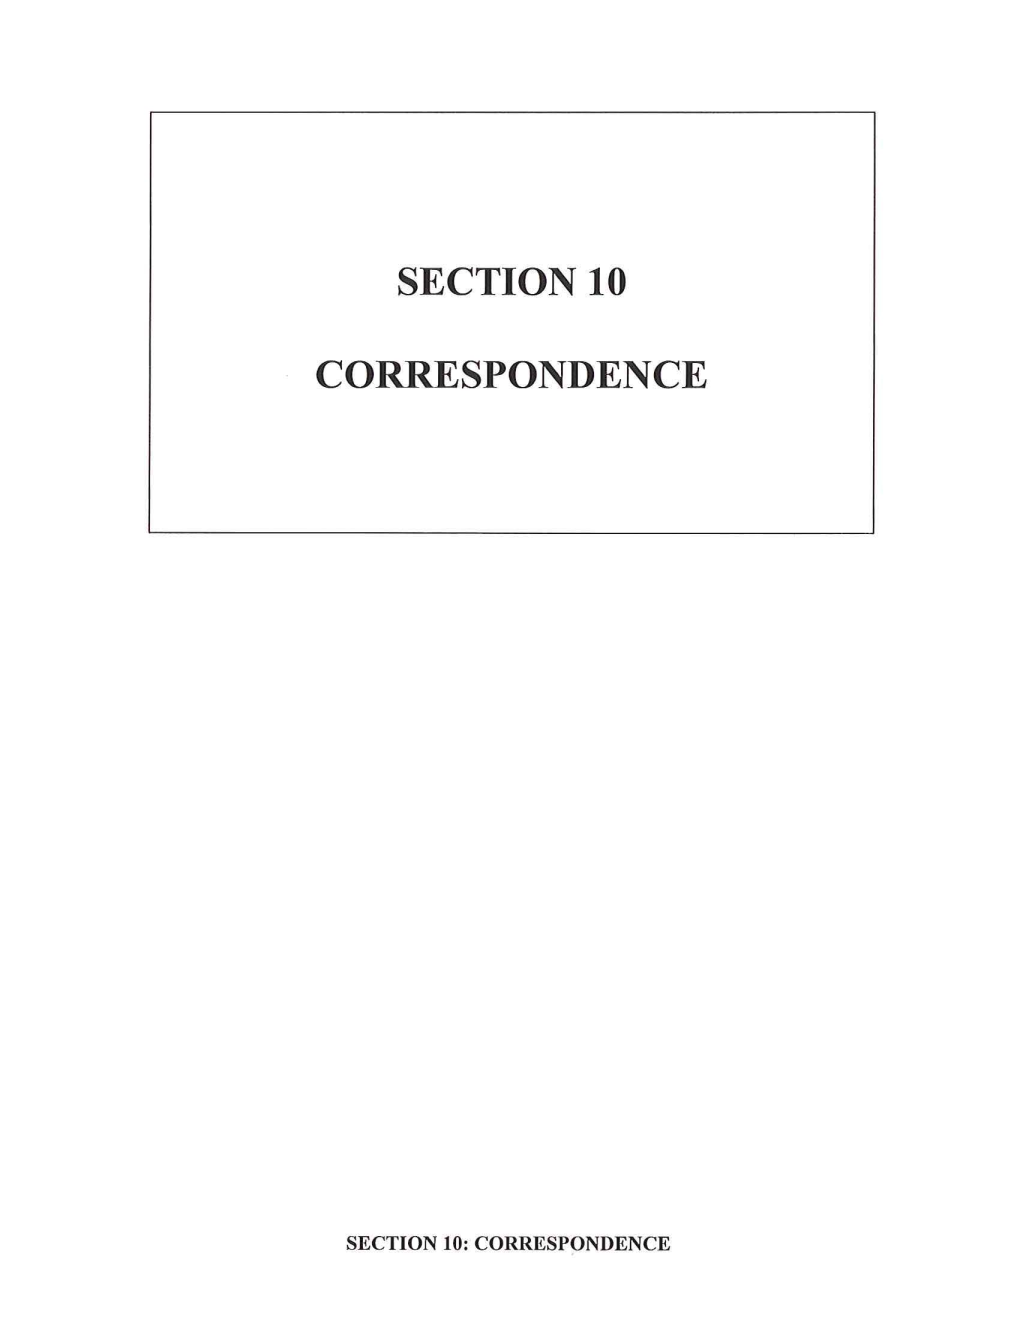 Section 10 Correspondence